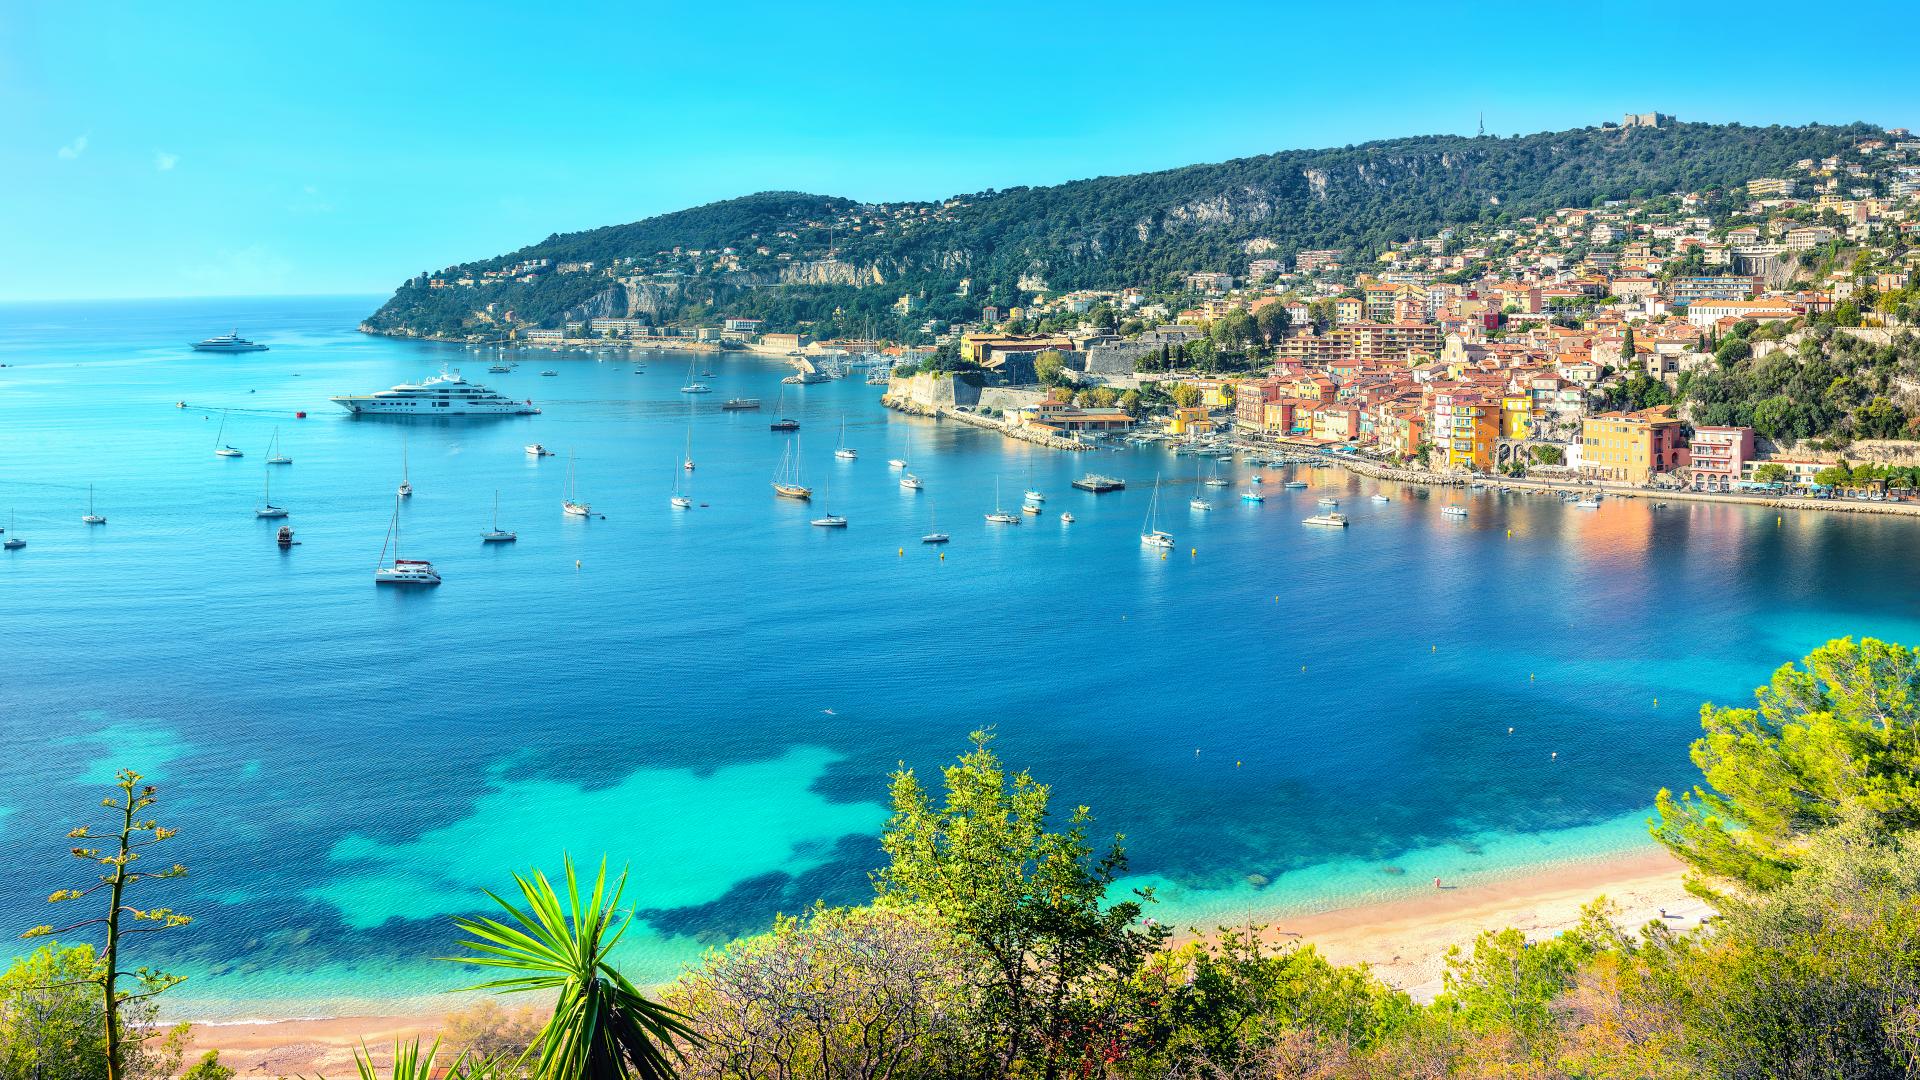 French Riviera (Côte d'Azur)